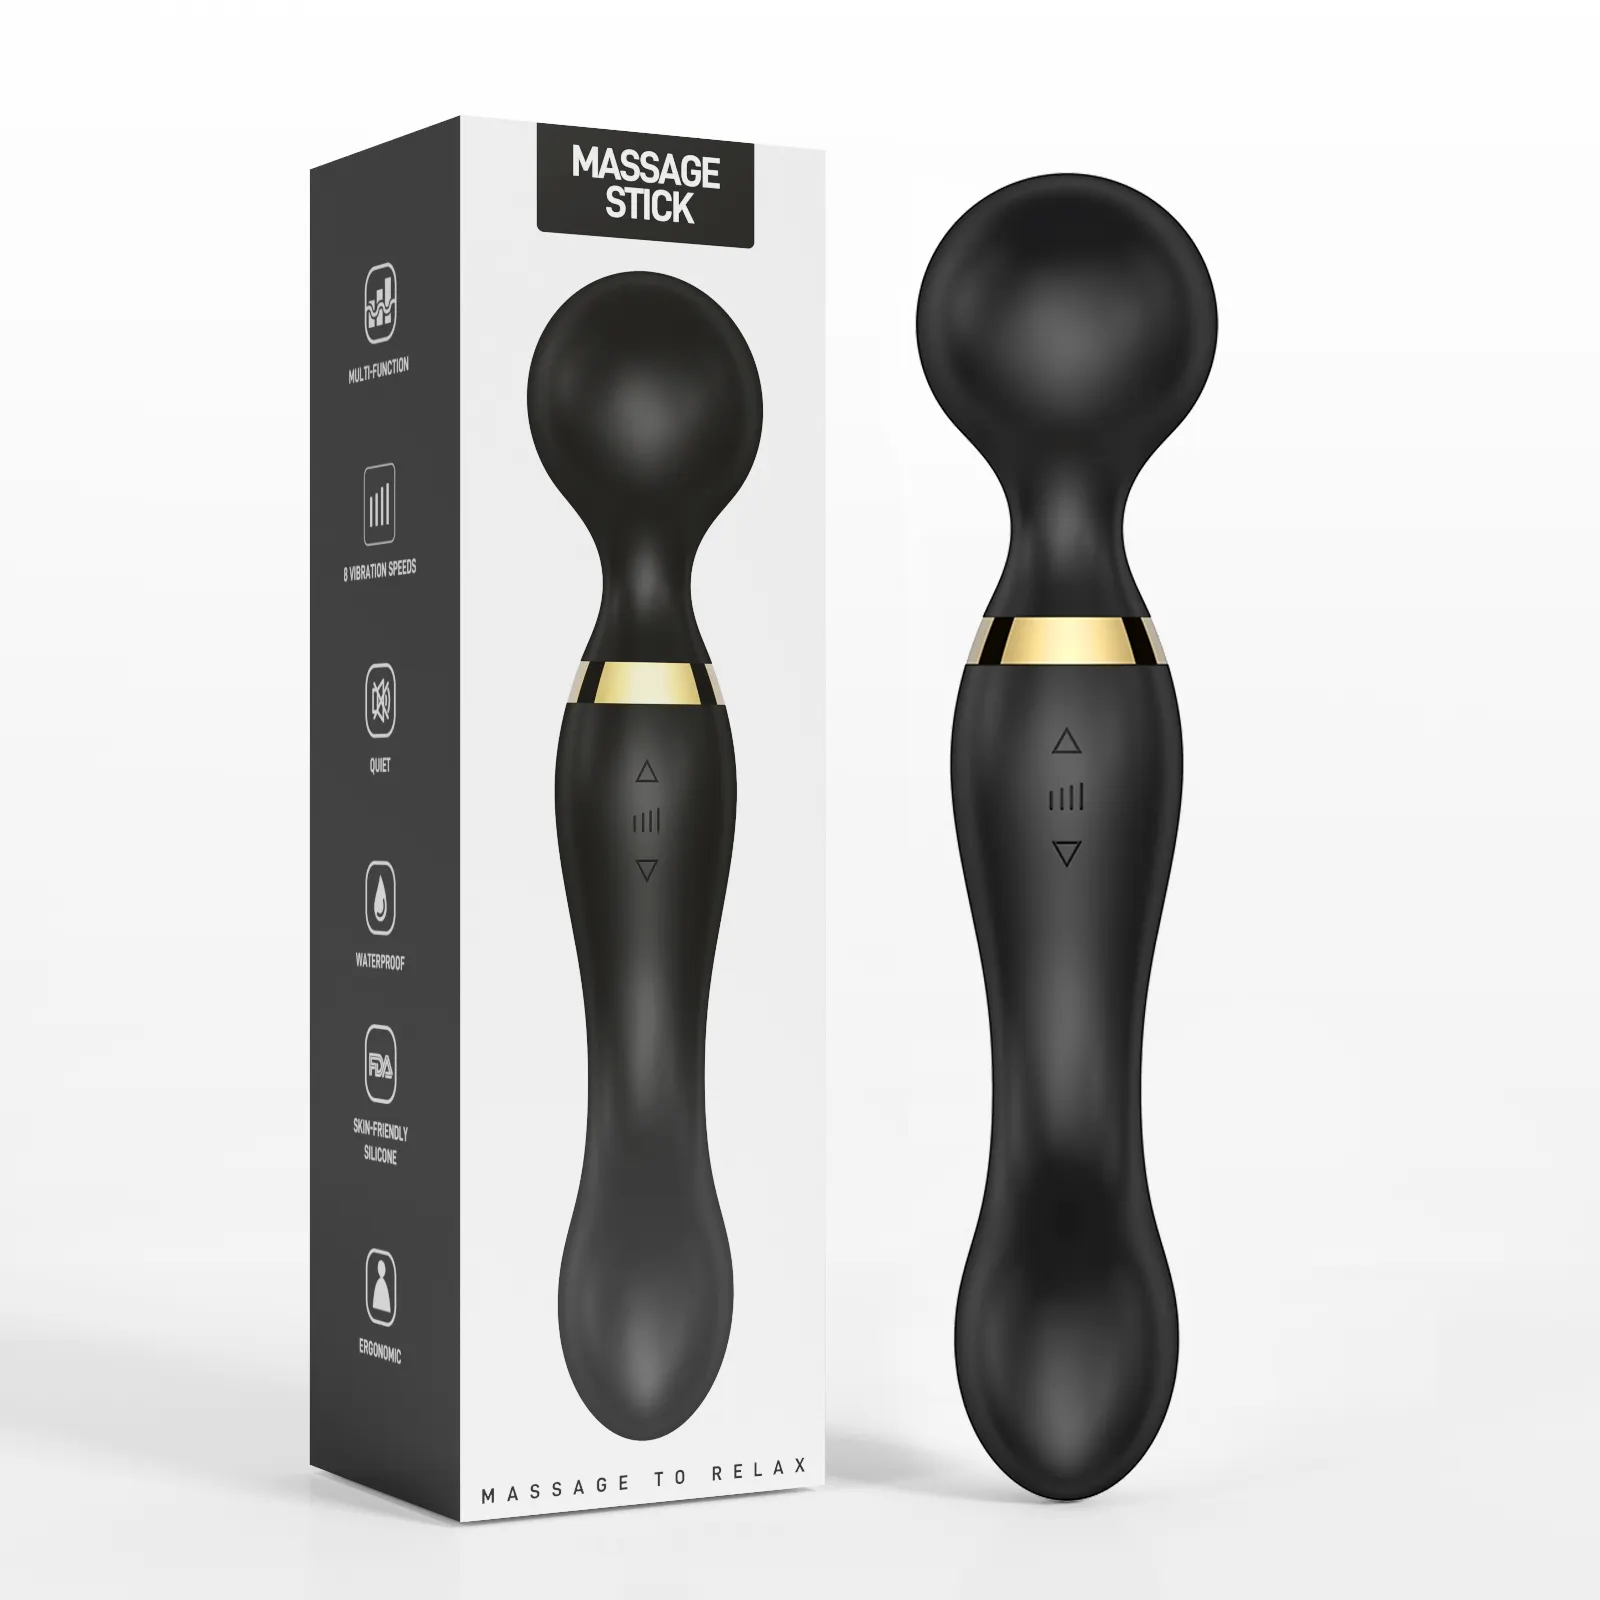 Nuevo vibrador de doble cabeza juguetes eróticos masajeador personal vibrador femenino maduro masajeador portátil vibrador vagina masajeador